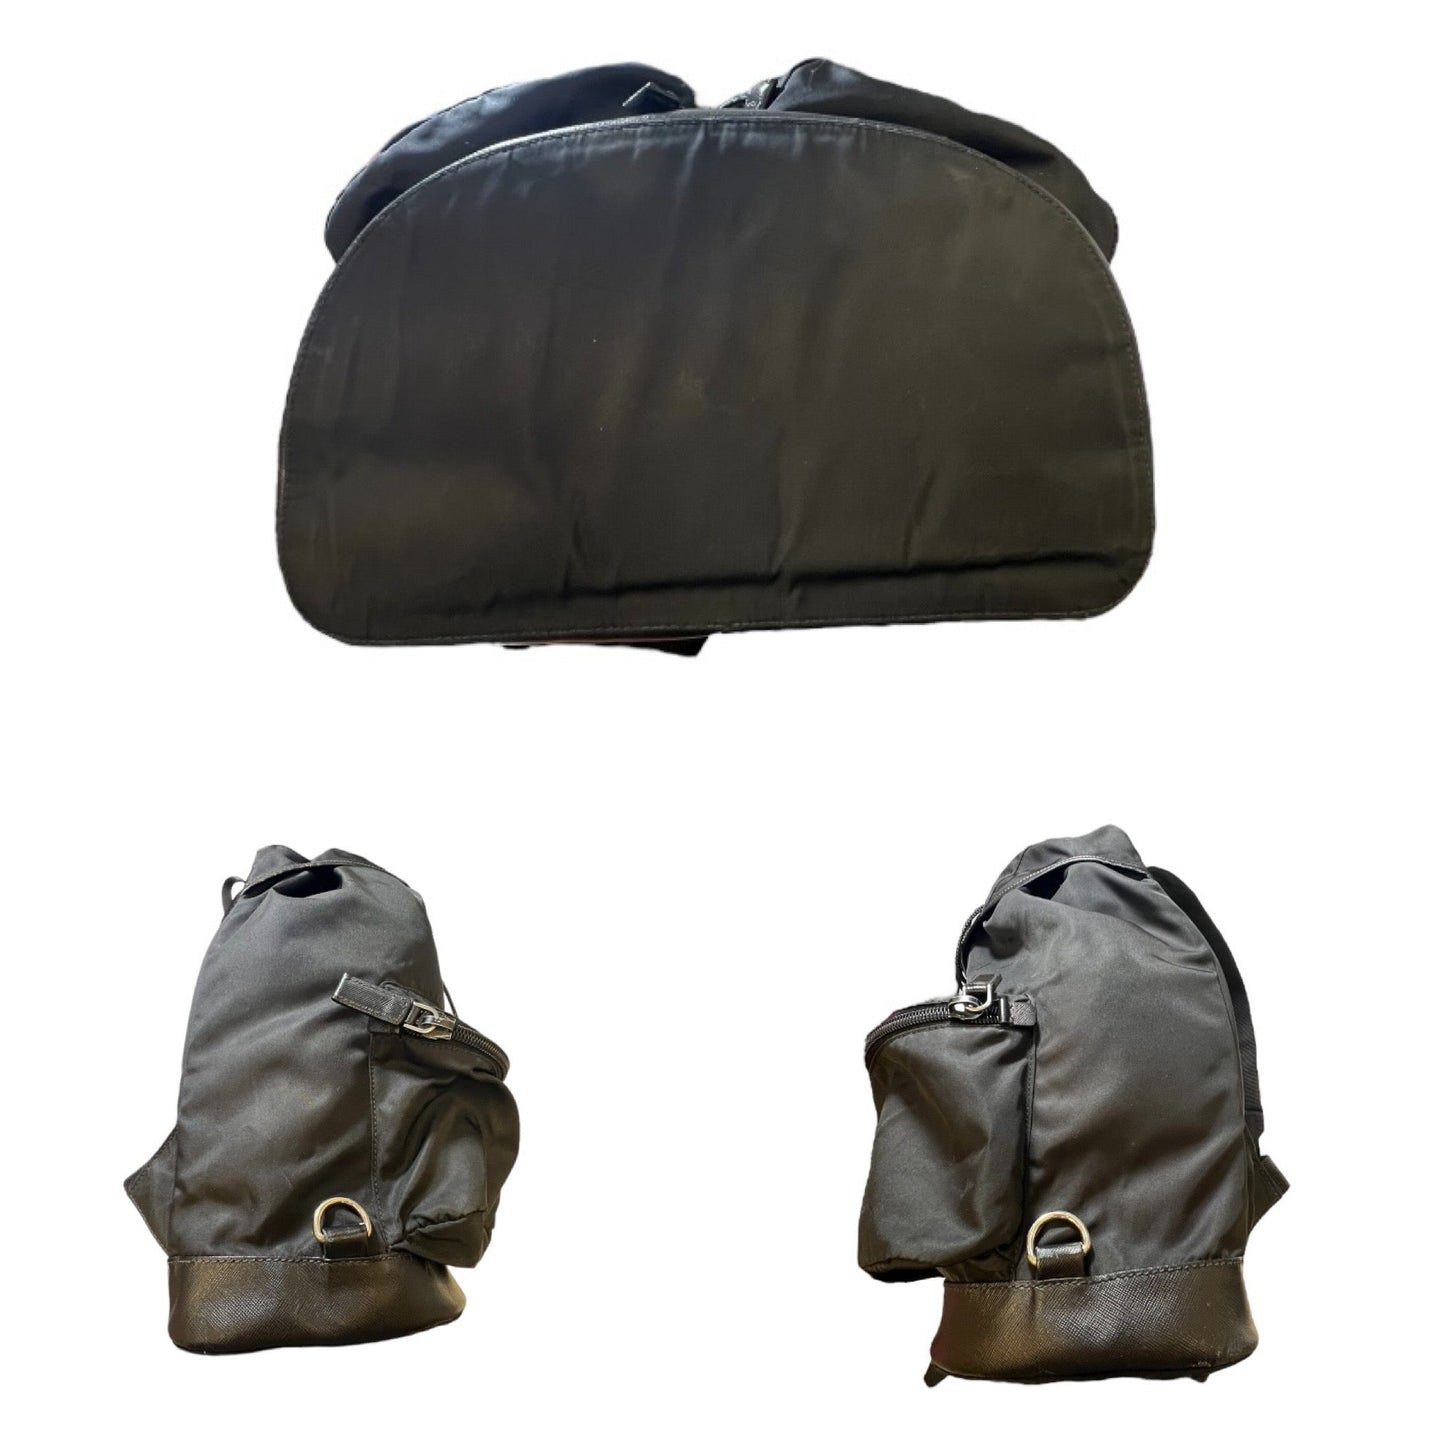 Backpack Luxury Designer By Prada  Size: Medium